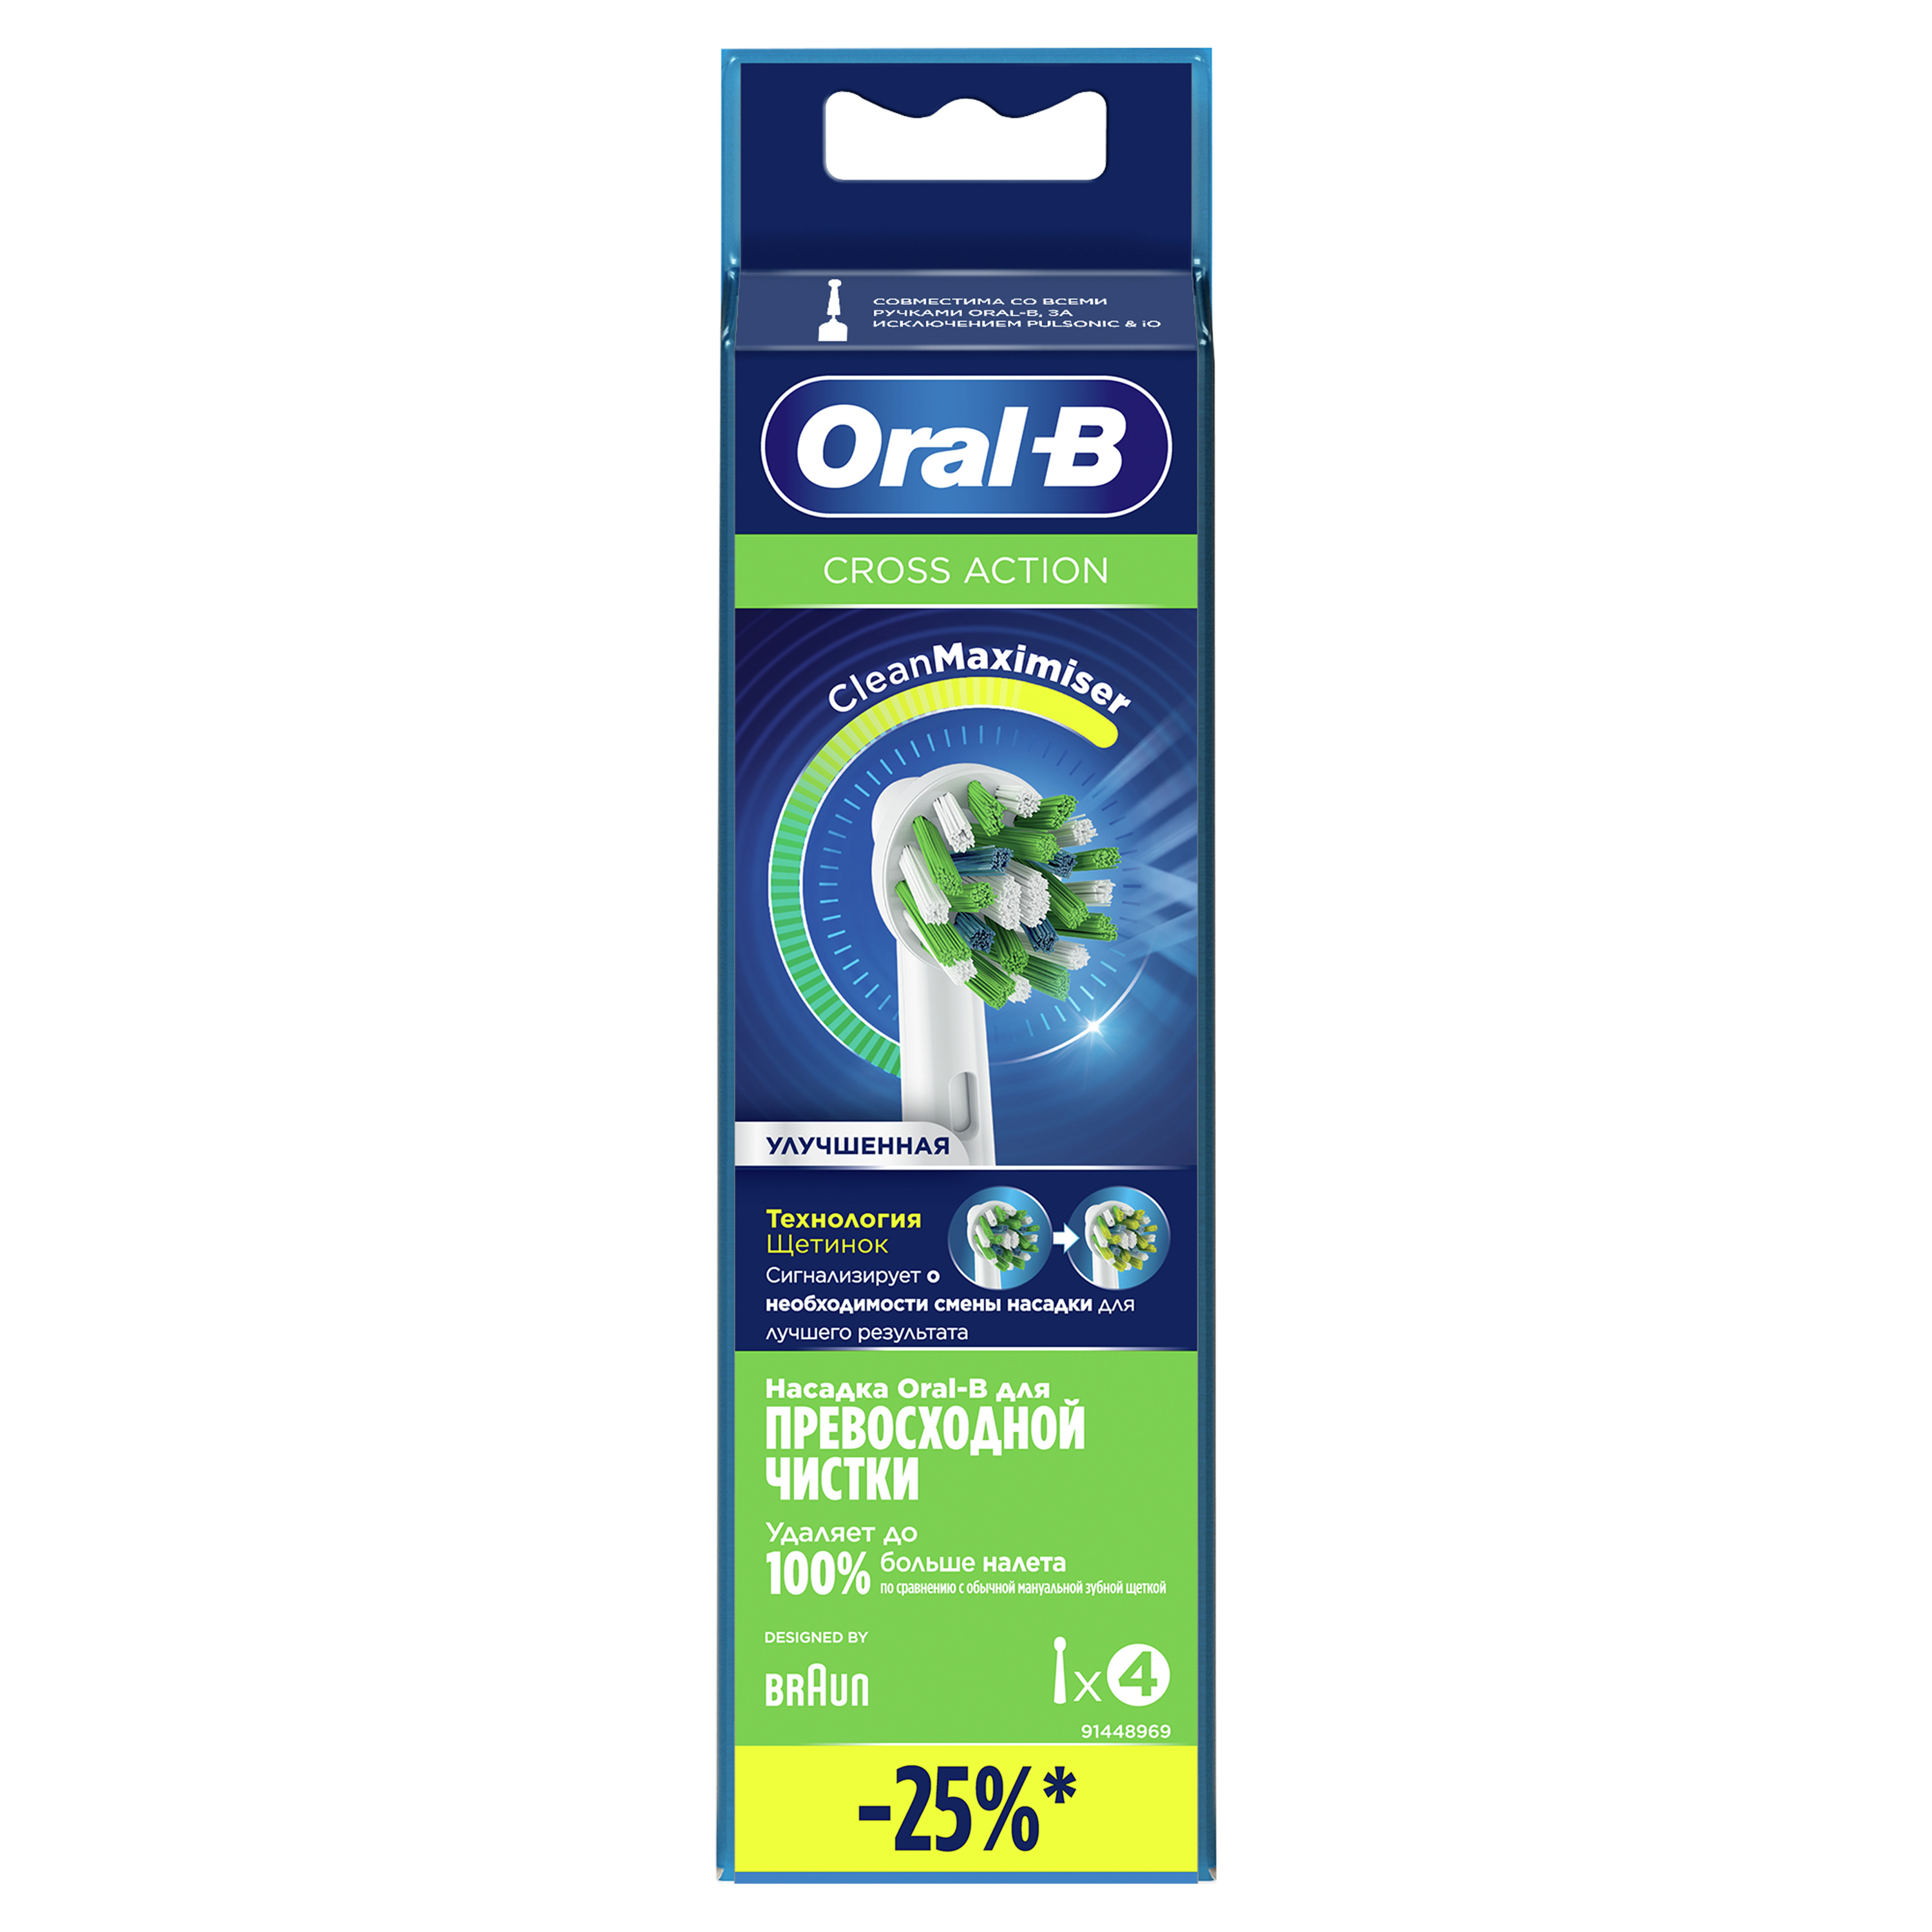 Насадки для зубной щетки ORAL-B EB50RB CrossAction 4 шт cleanmaximiser белая